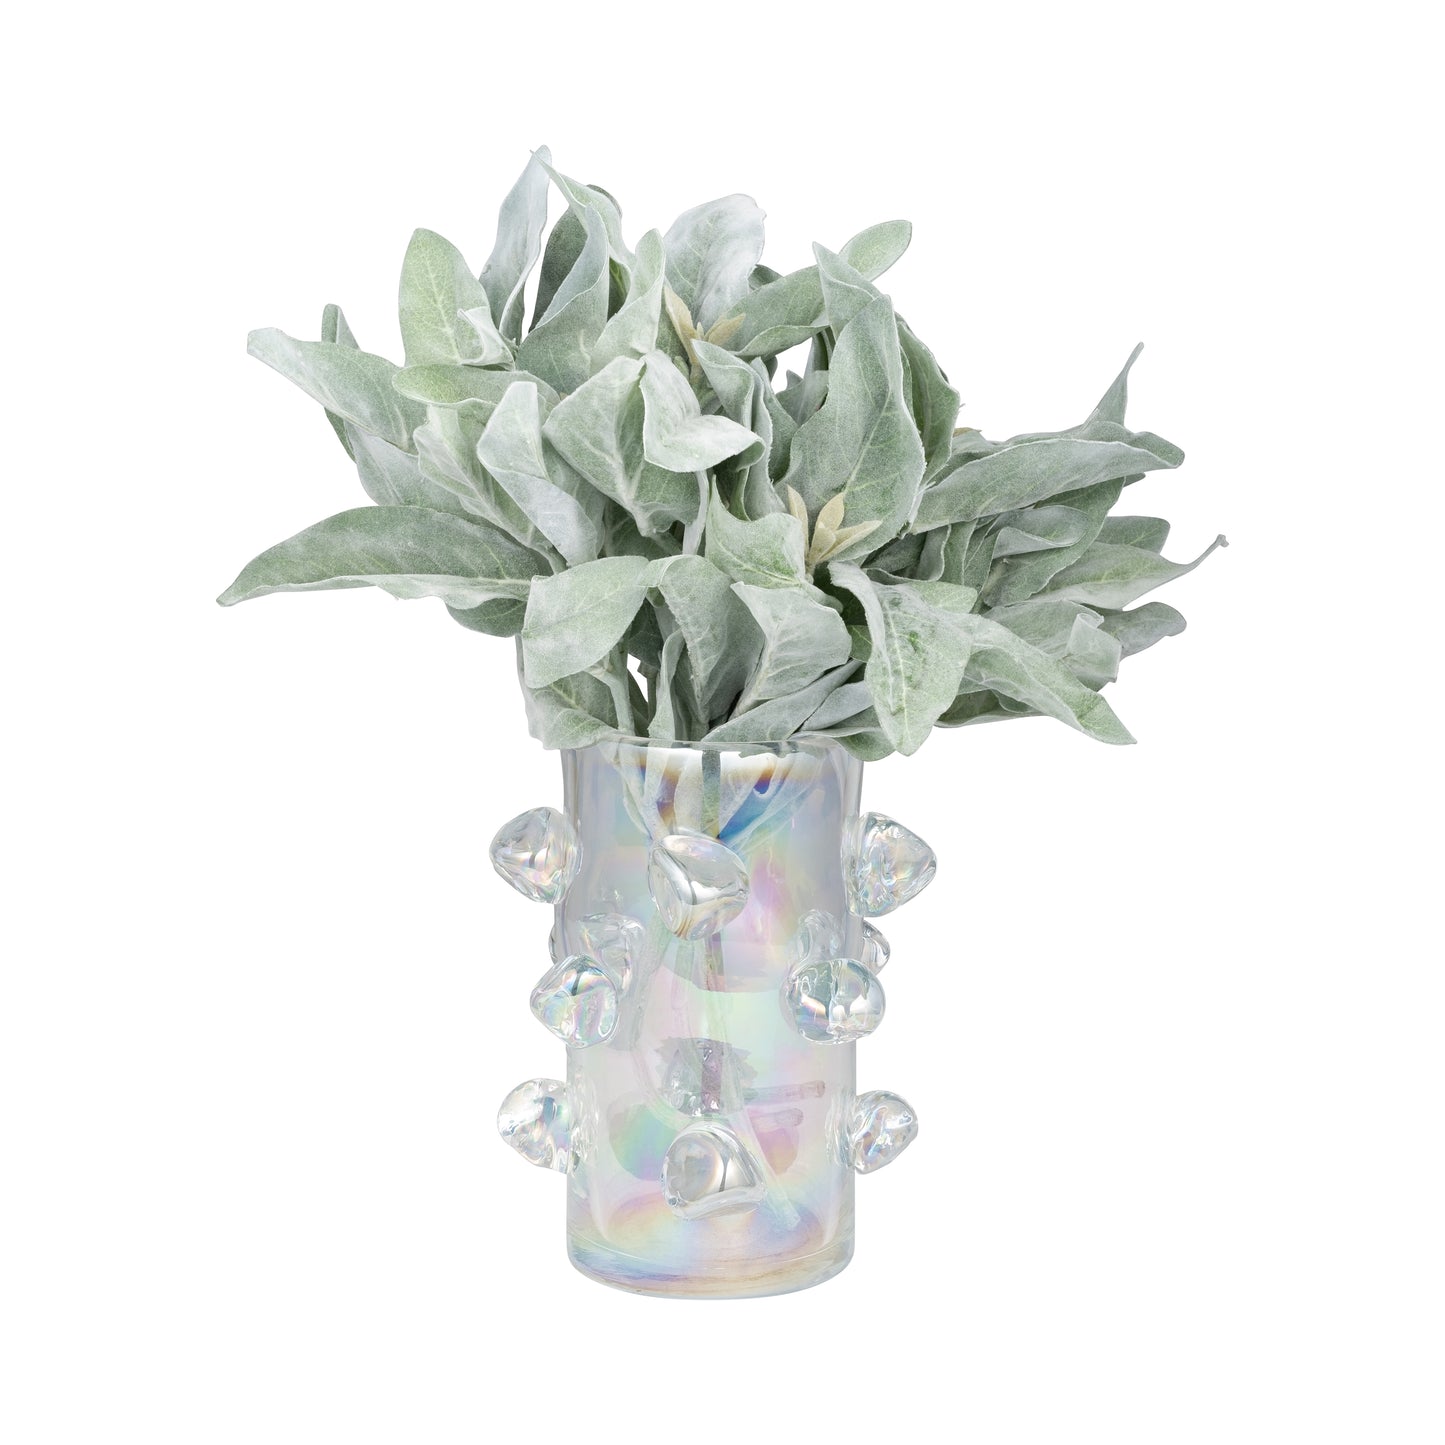 Zabelle Iridescent Knotted Glass Vase 9"